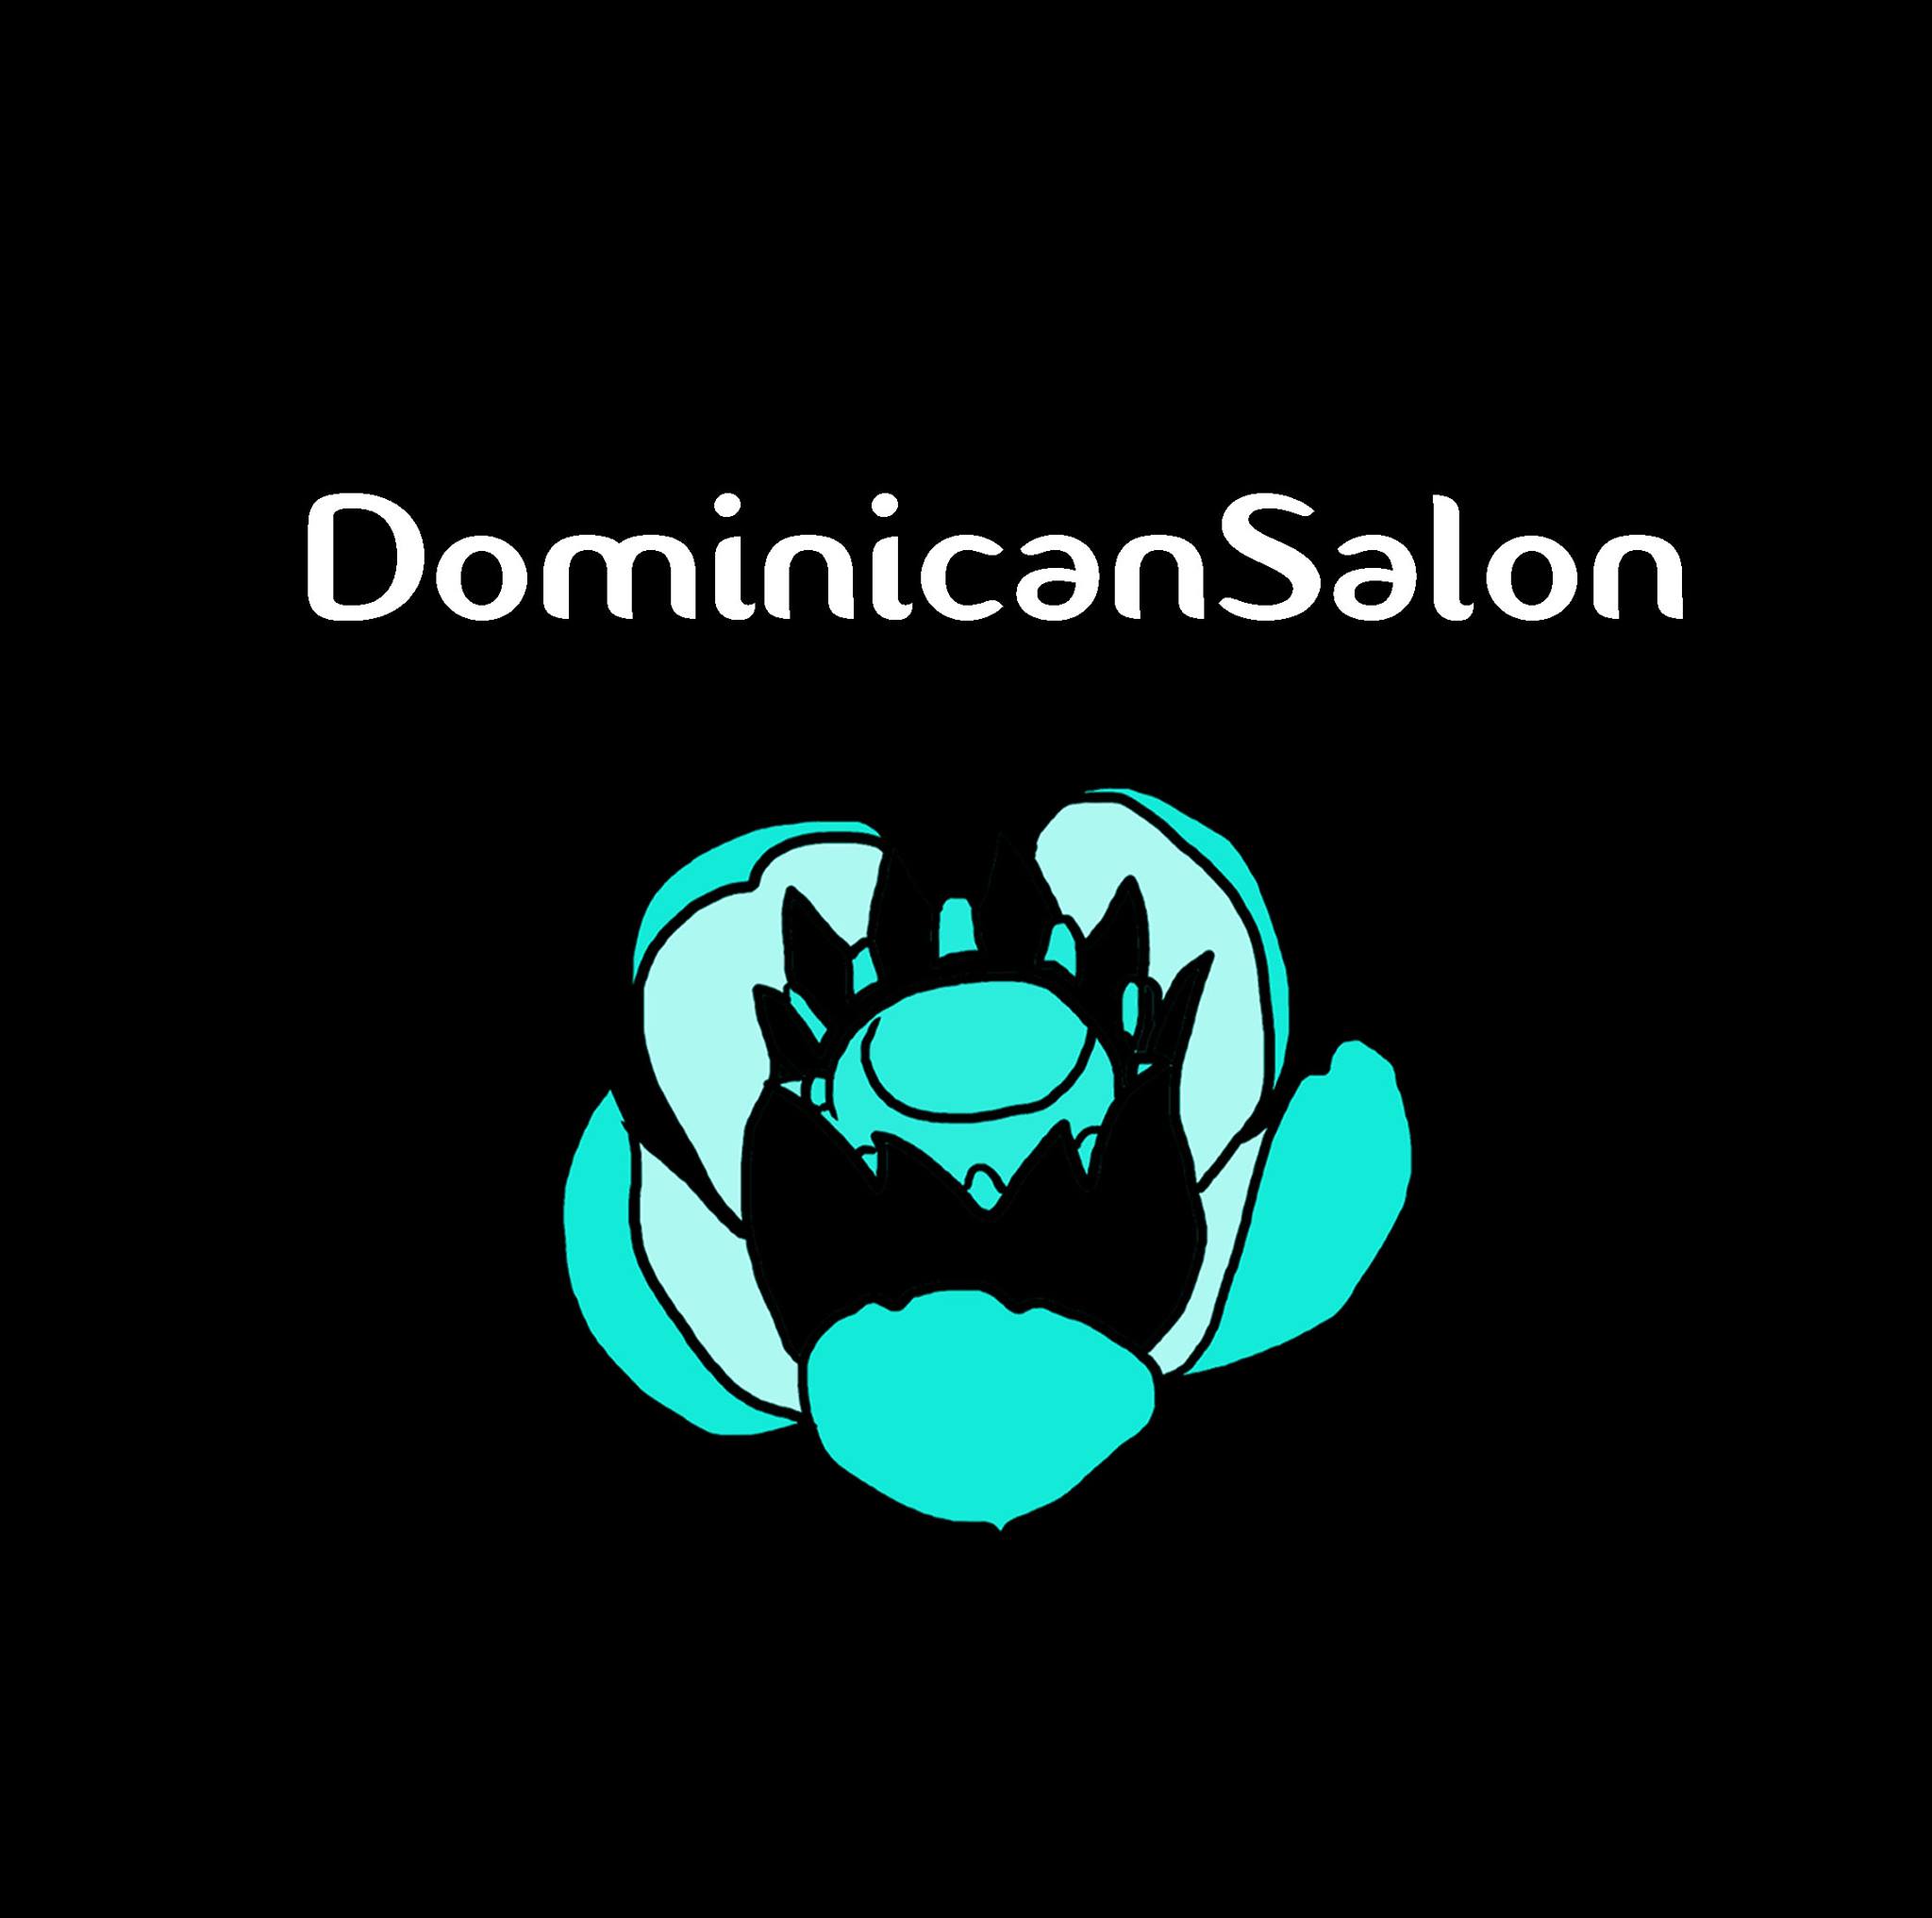 Gladys Dominican Salon